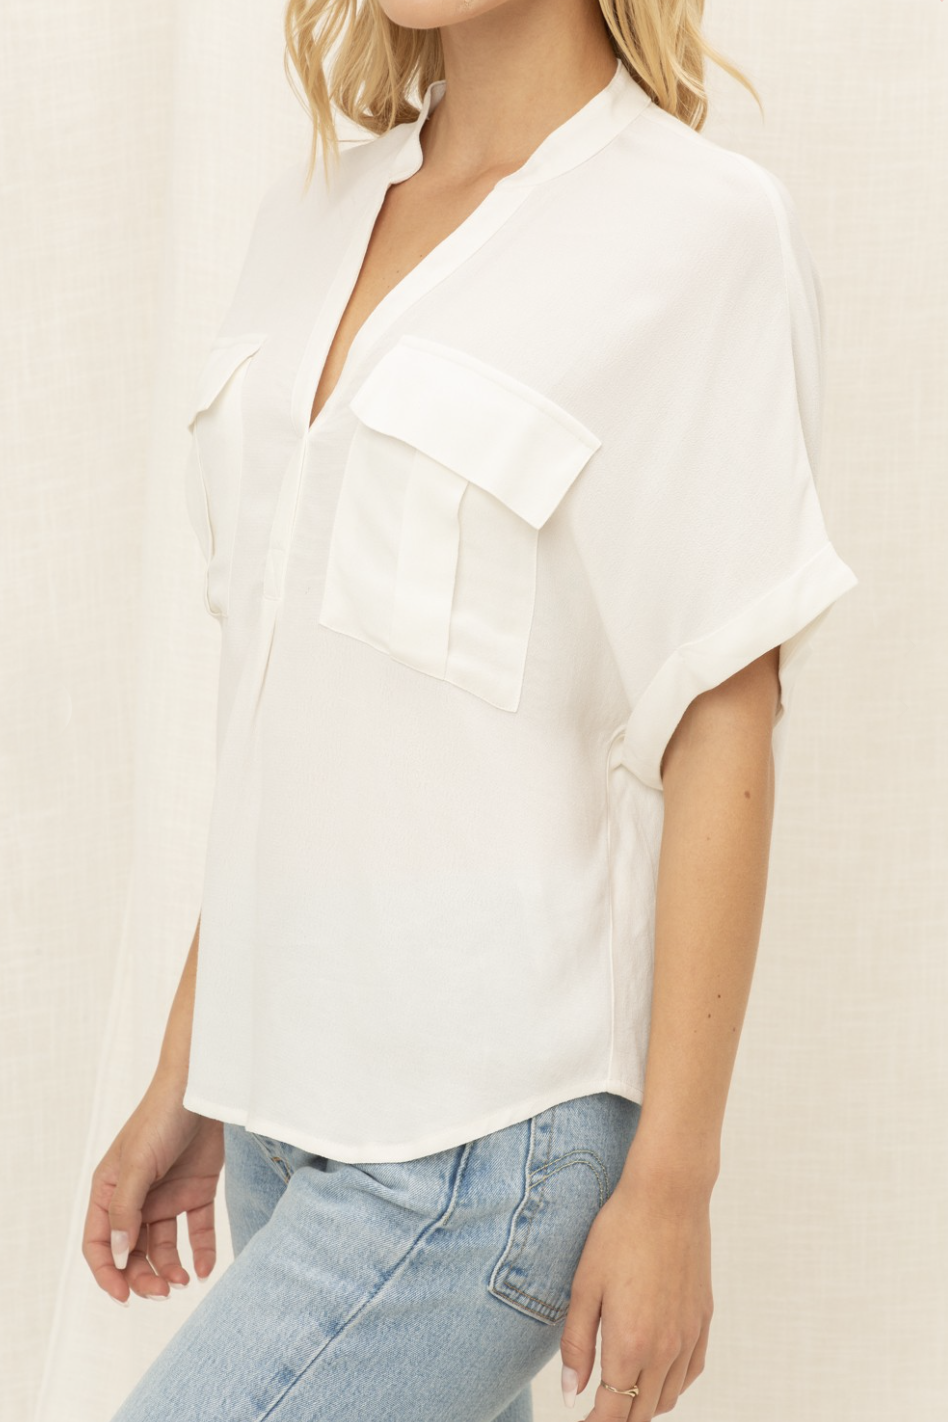 Glow Fashion Boutique White Short Sleeve Blouse